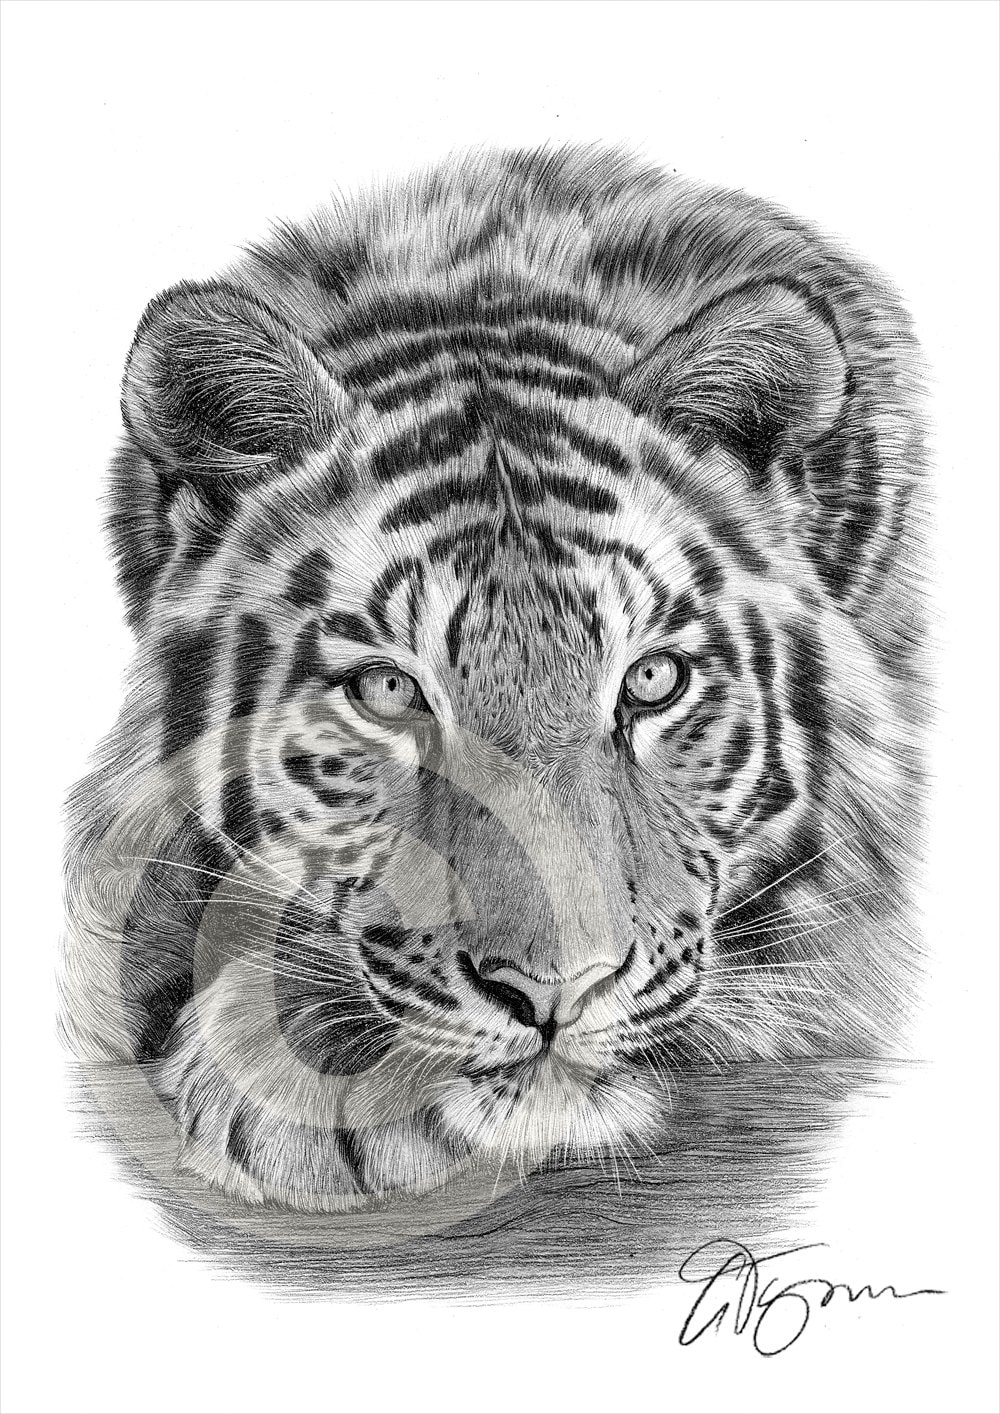 Sumatran Tiger pencil drawing print A4 size artwork signed